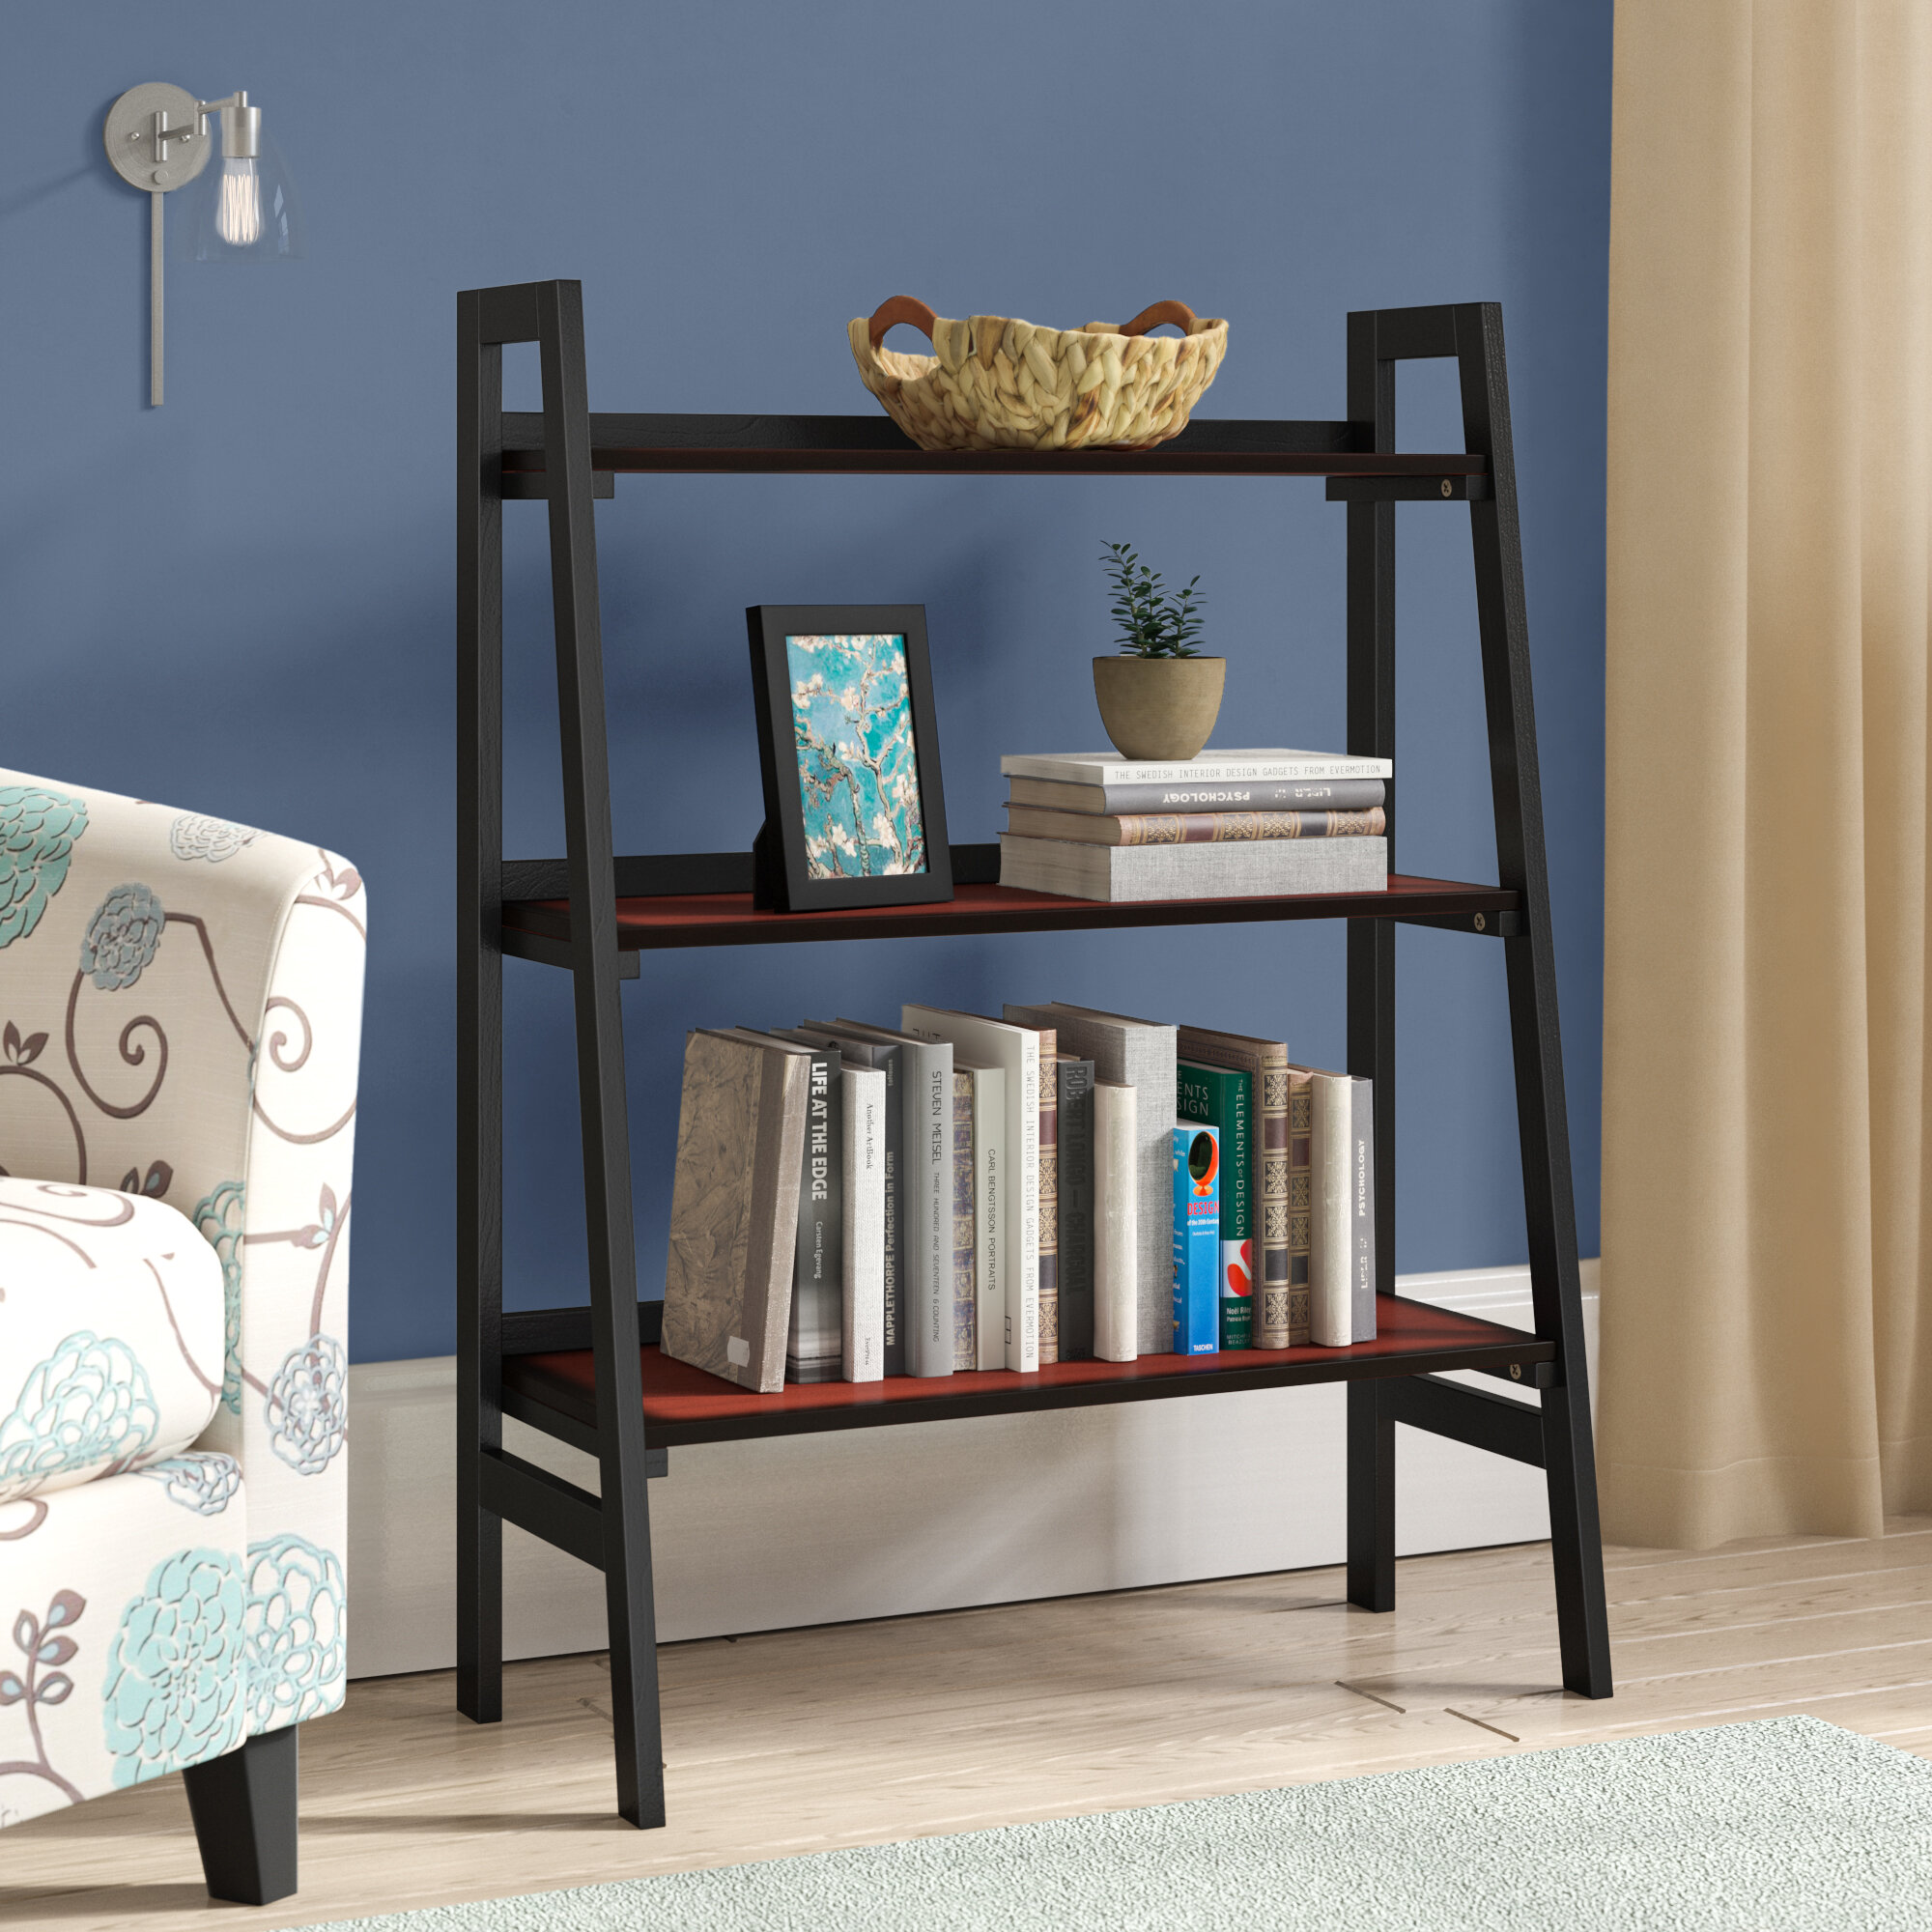 Details about   Open Bookcase 3 Shelf Storage Shelves Bookshelf Furniture Tier Wood White New 